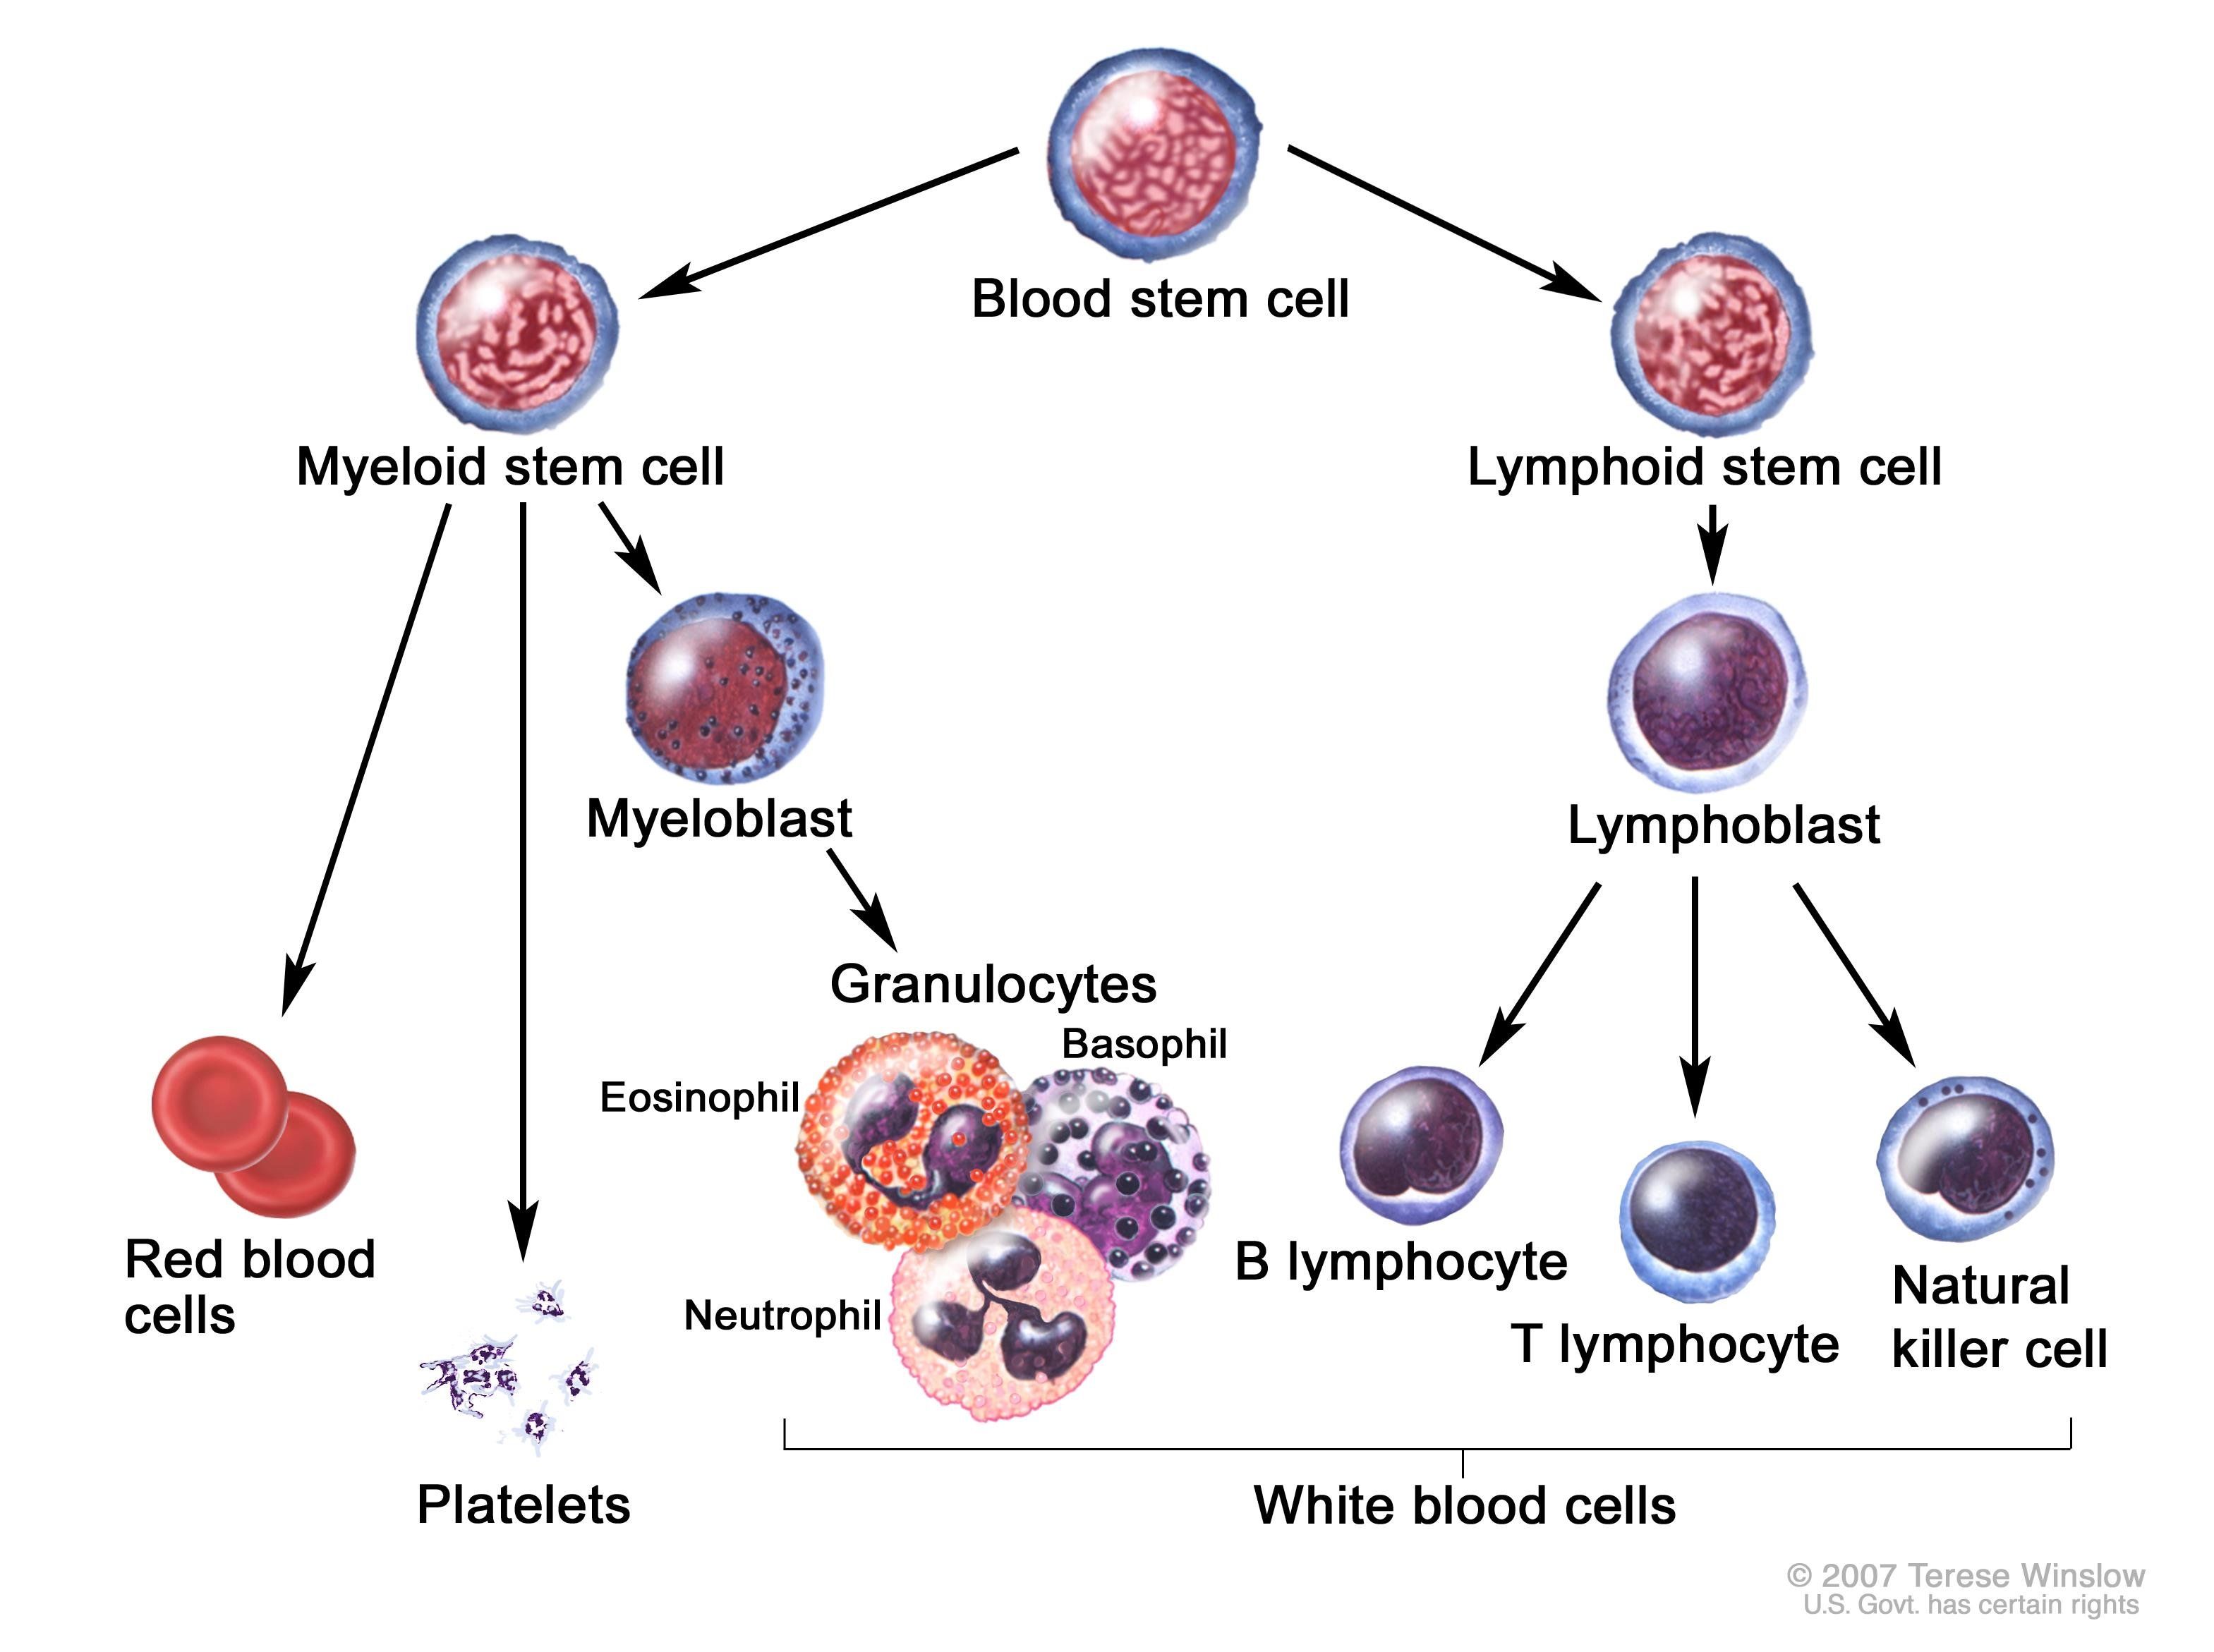 Malignant tumor of mature lymphocytes